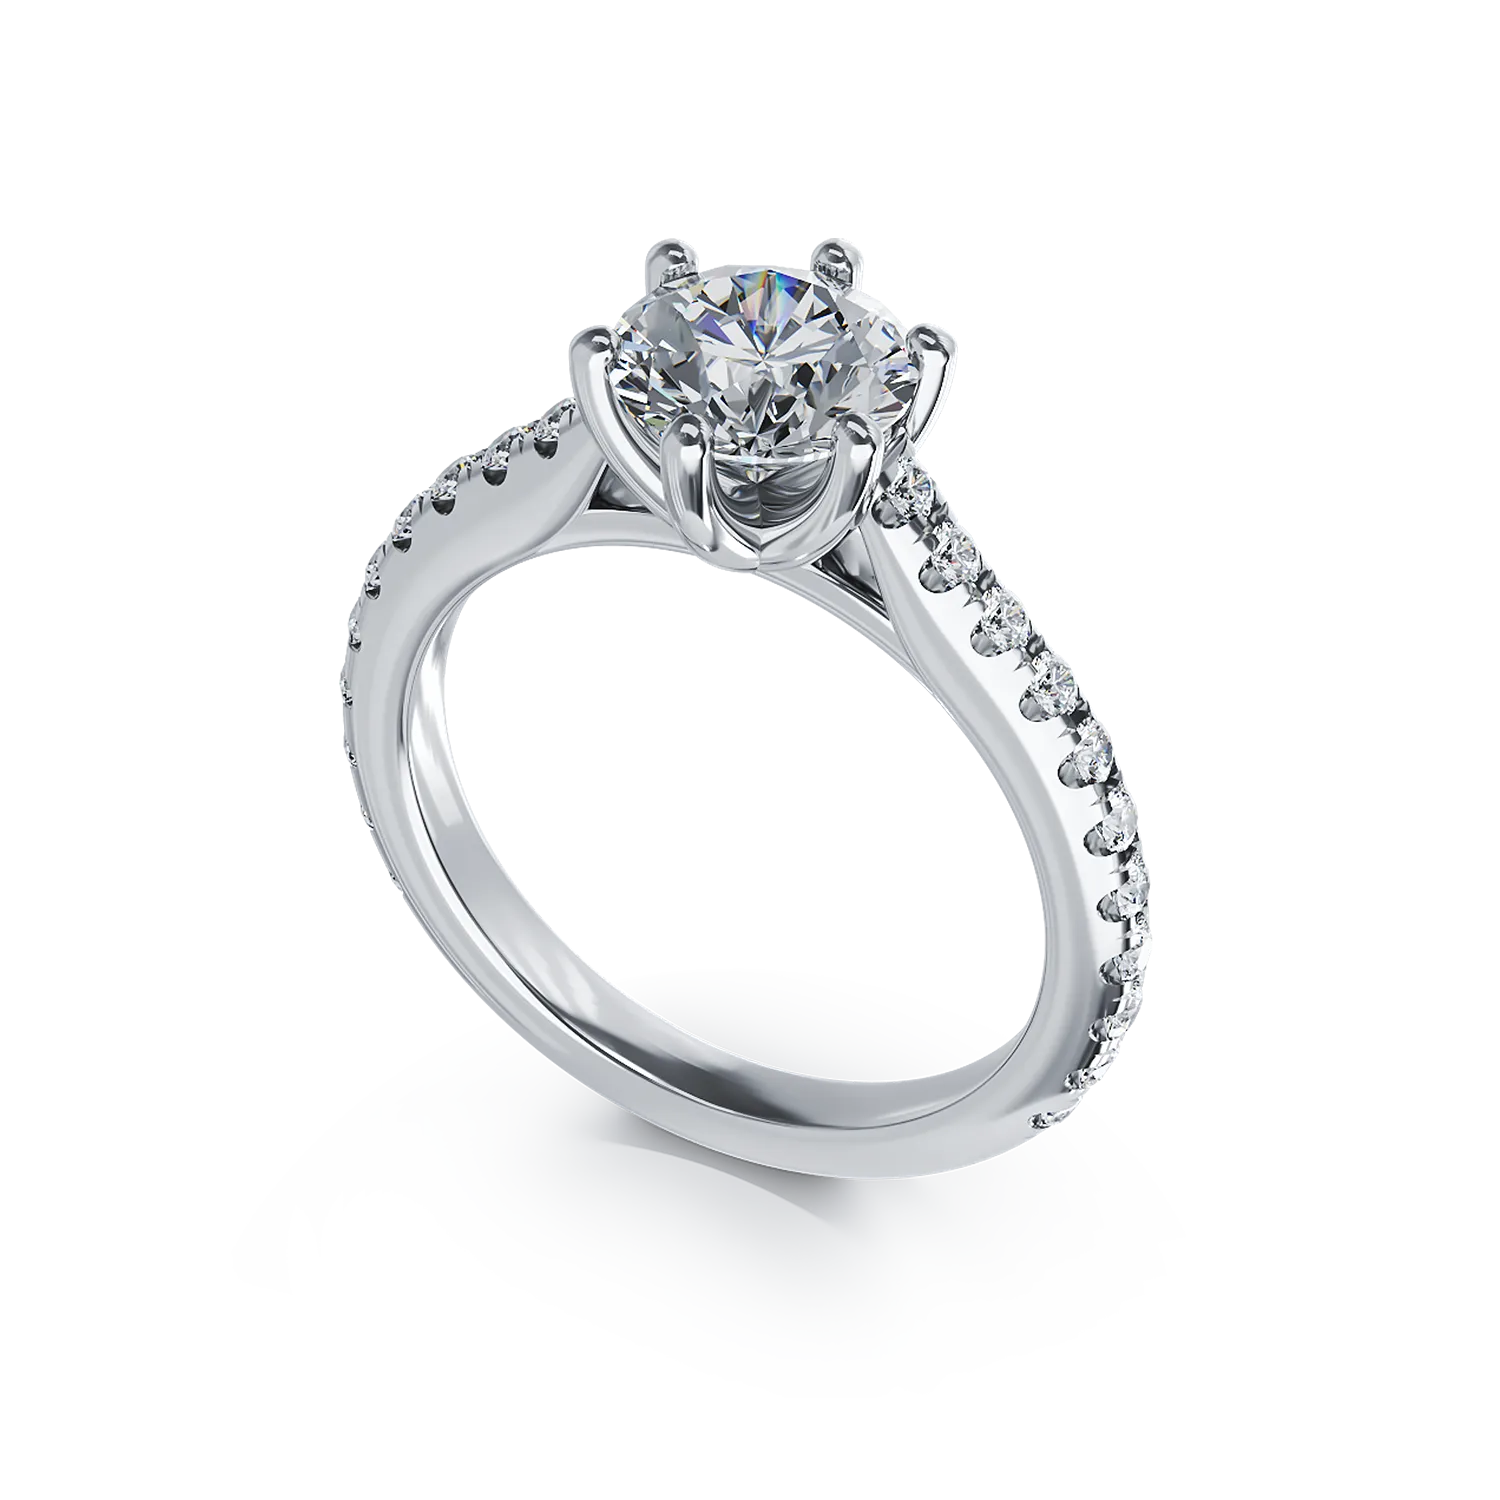 Inel de logodna din aur alb de 18K cu diamant de 1.31ct si diamante de 0.307ct